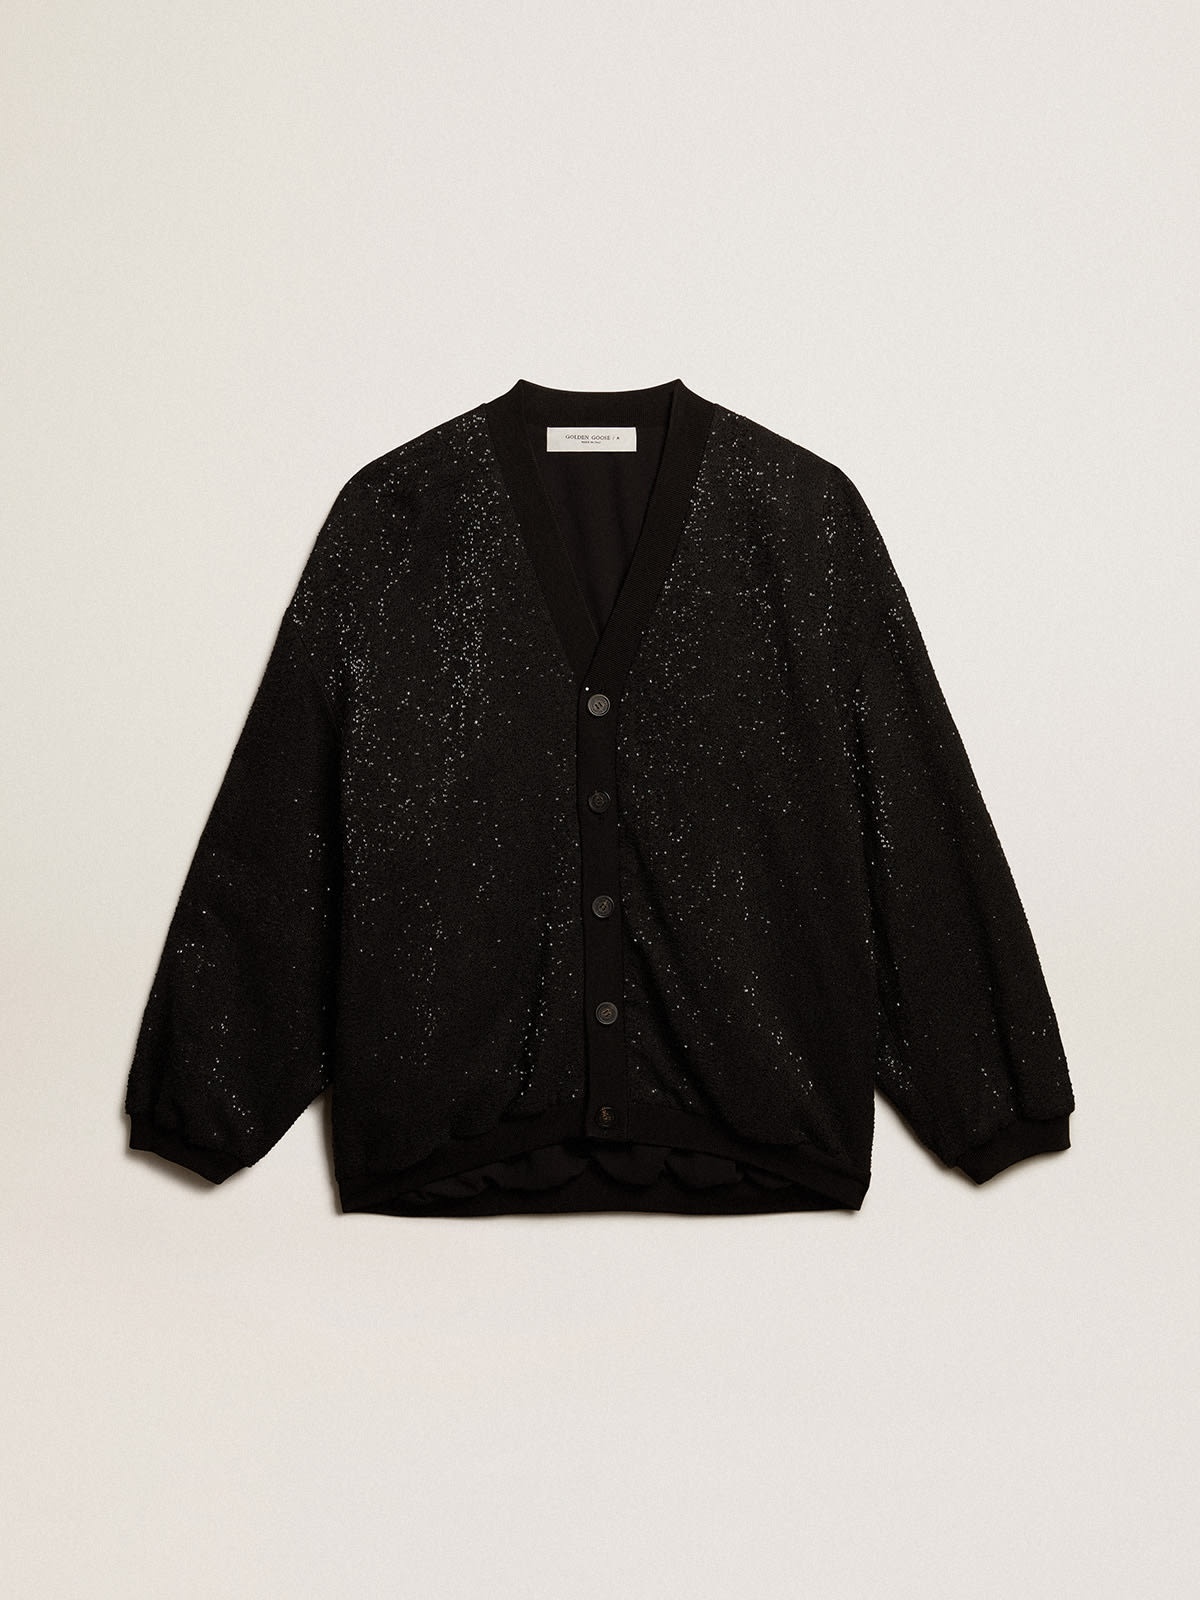 Men’s black sequined cardigan-jacket - 1